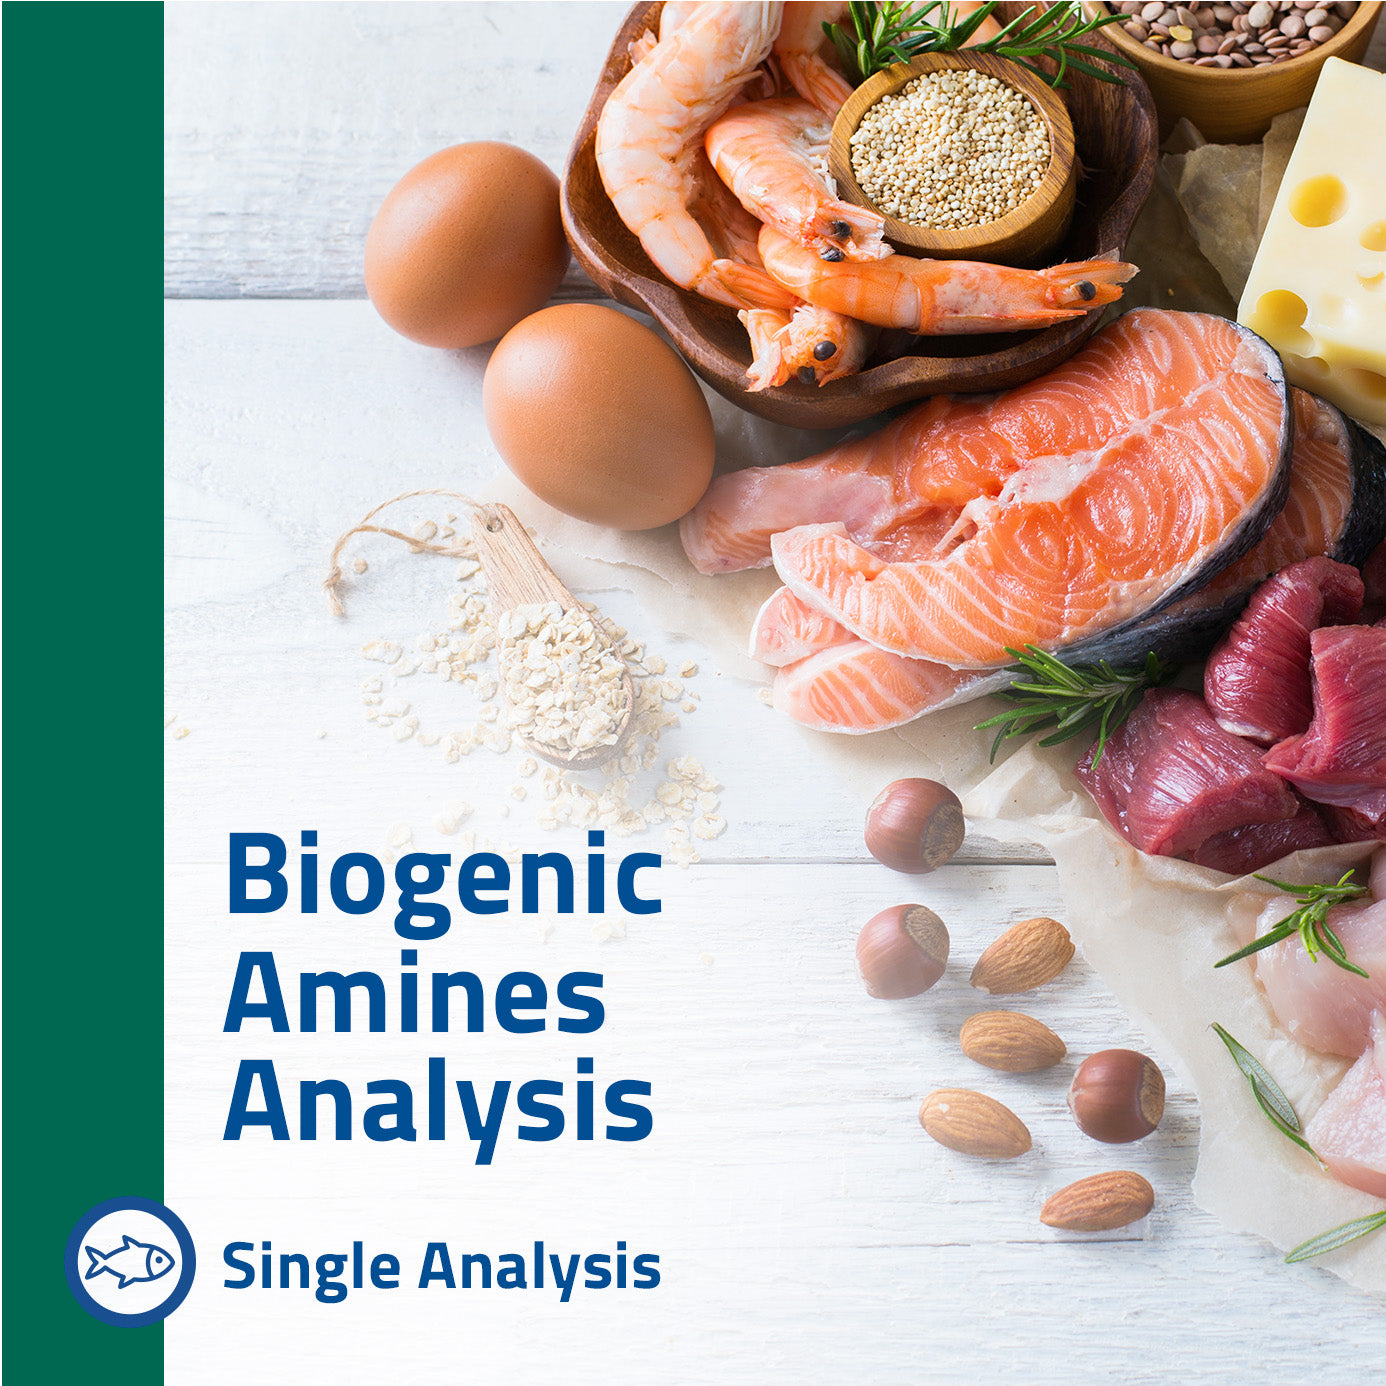 Single Biogenic Amines Analysis